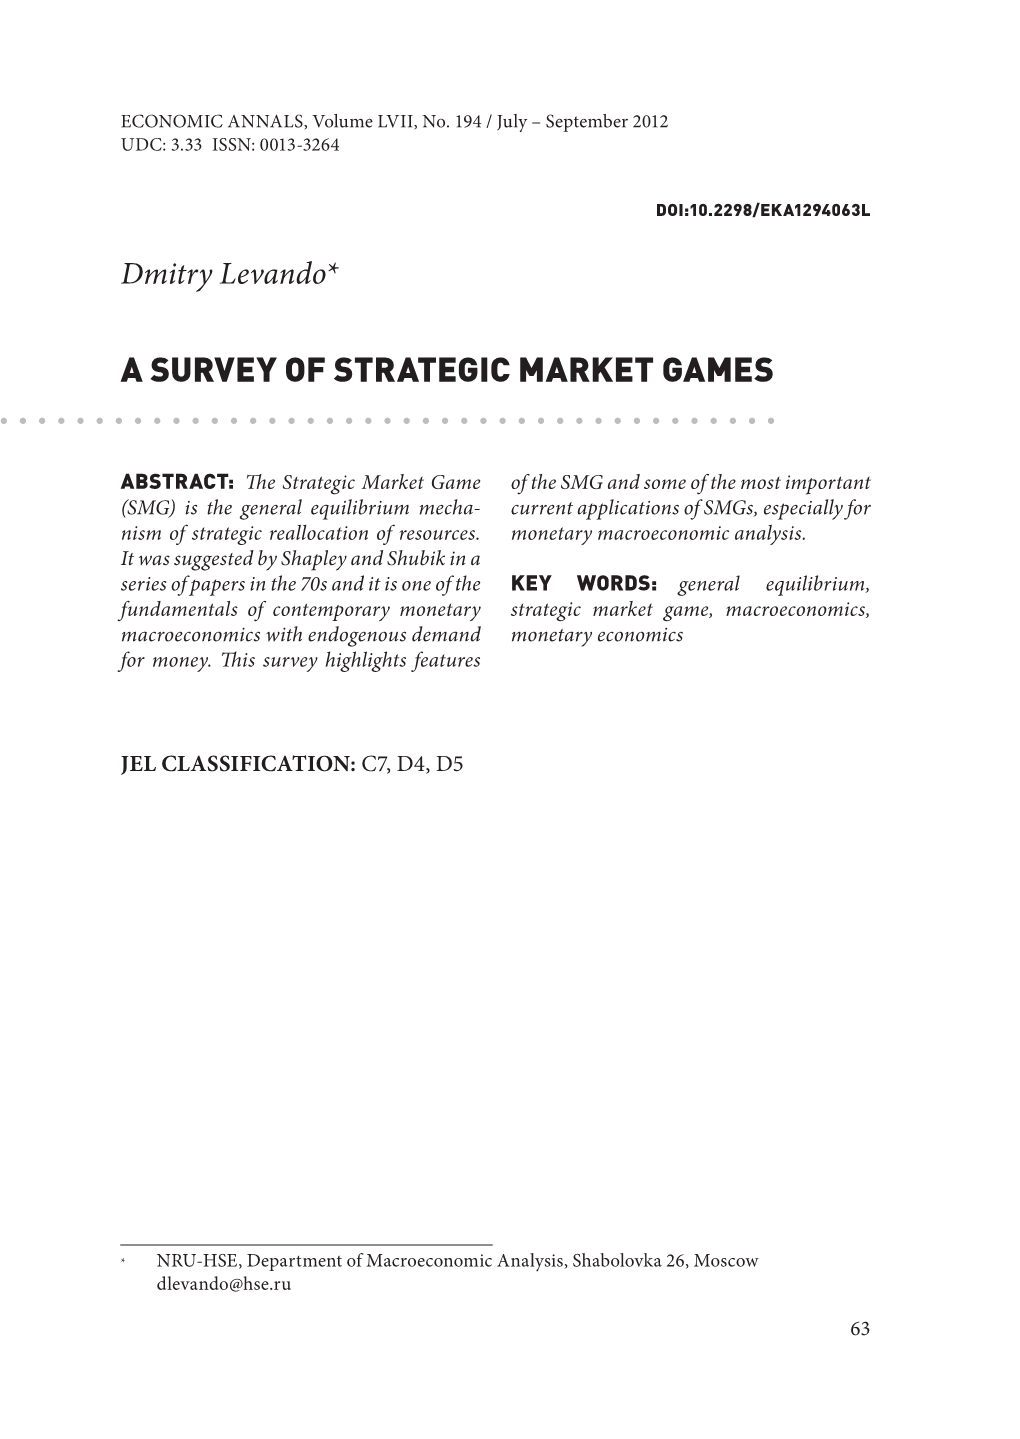 A Survey of Strategic Market Games